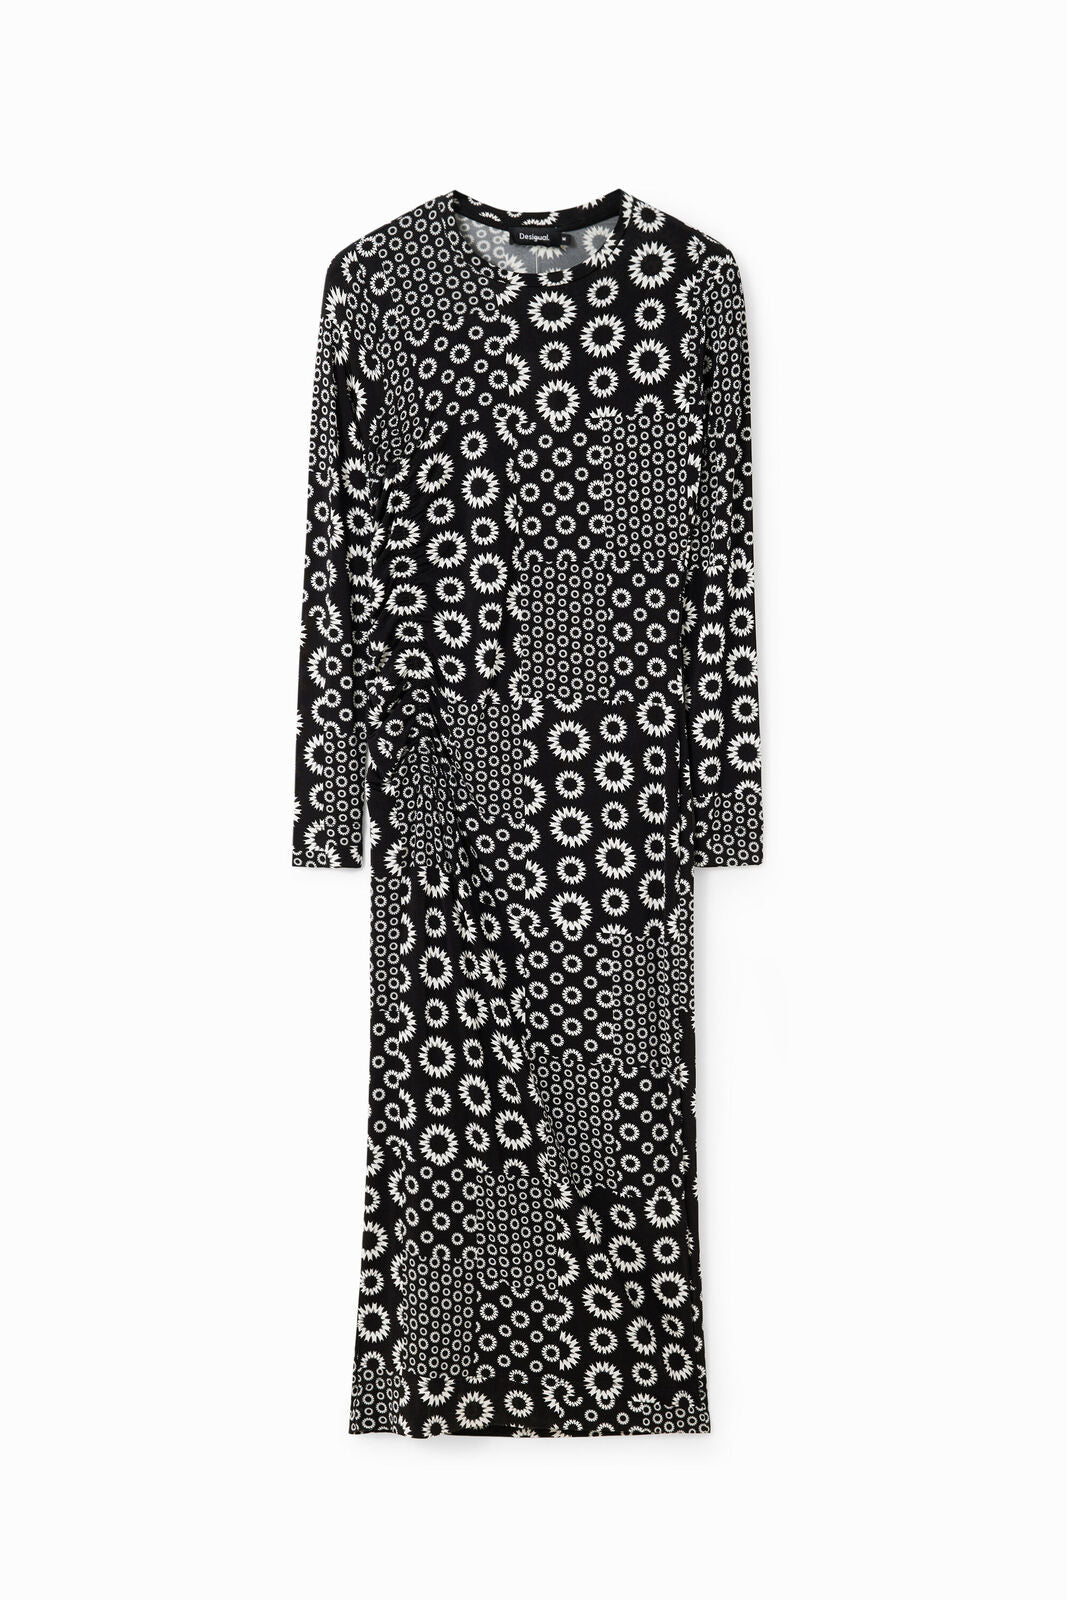 Desigual Slinky Motif Print Dress - Black/White